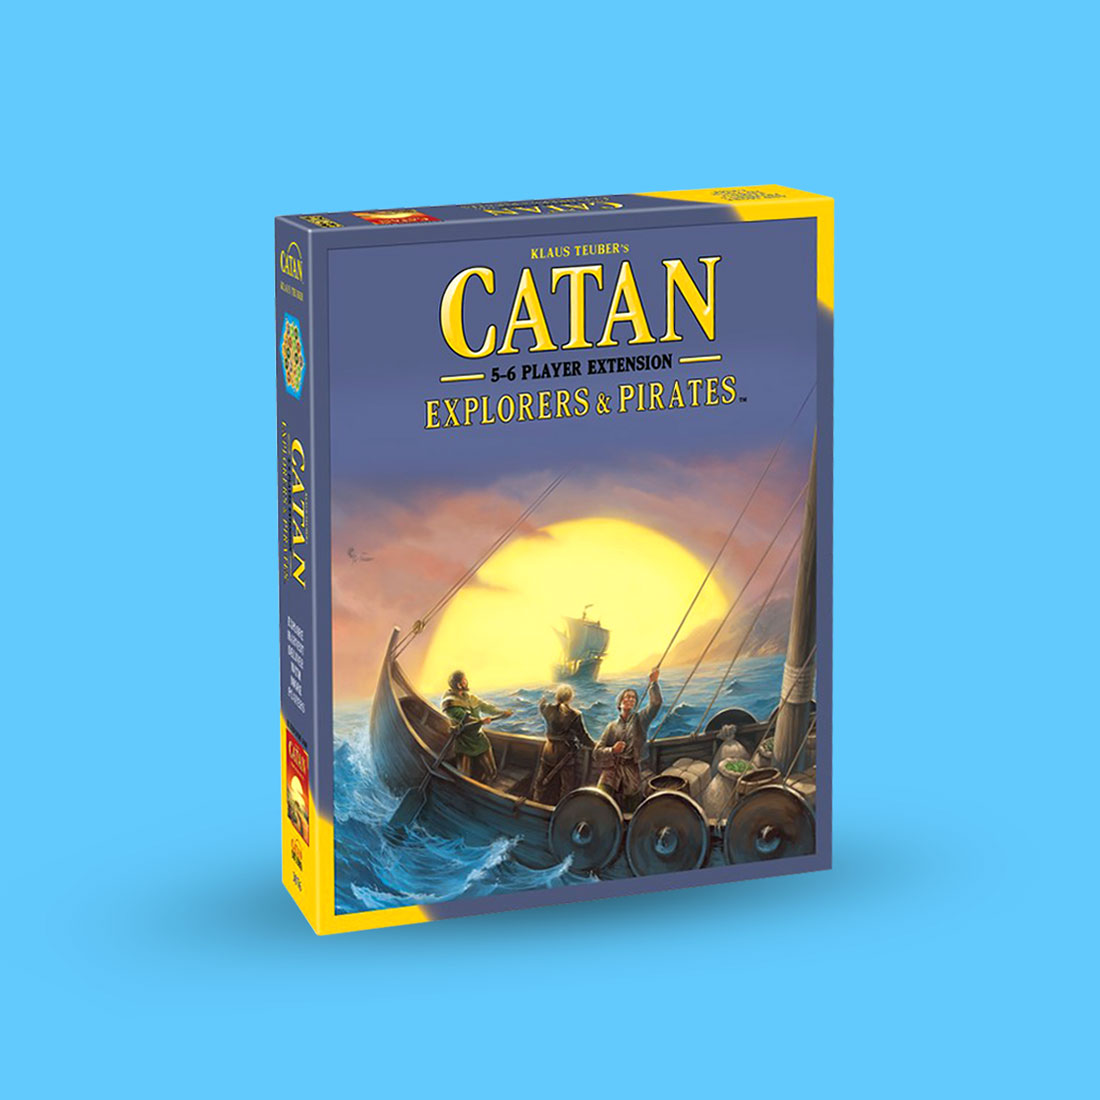 5-6 Player EXTENSION Catan Explorers & Pirates 5th Edition Extension Game Studio 